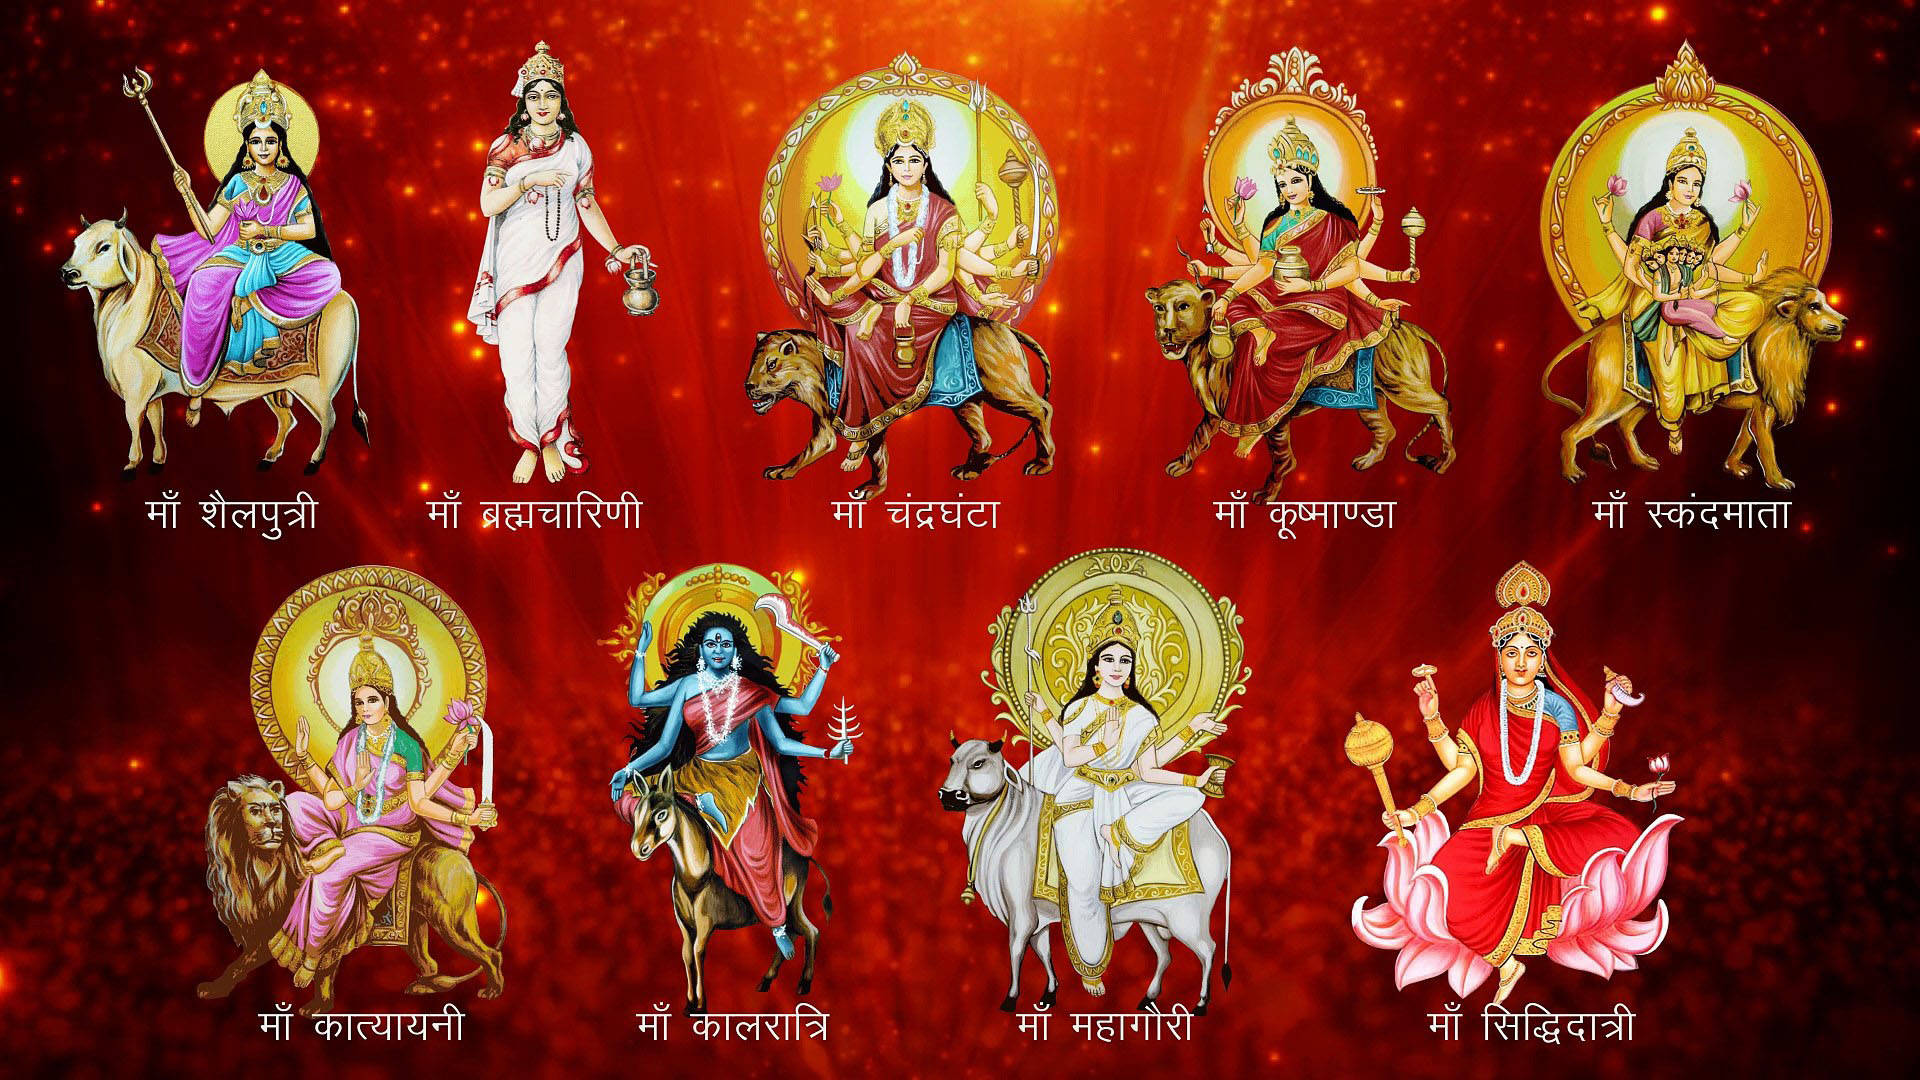 Free Nav Durga Wallpaper Downloads, [100+] Nav Durga Wallpapers for FREE |  